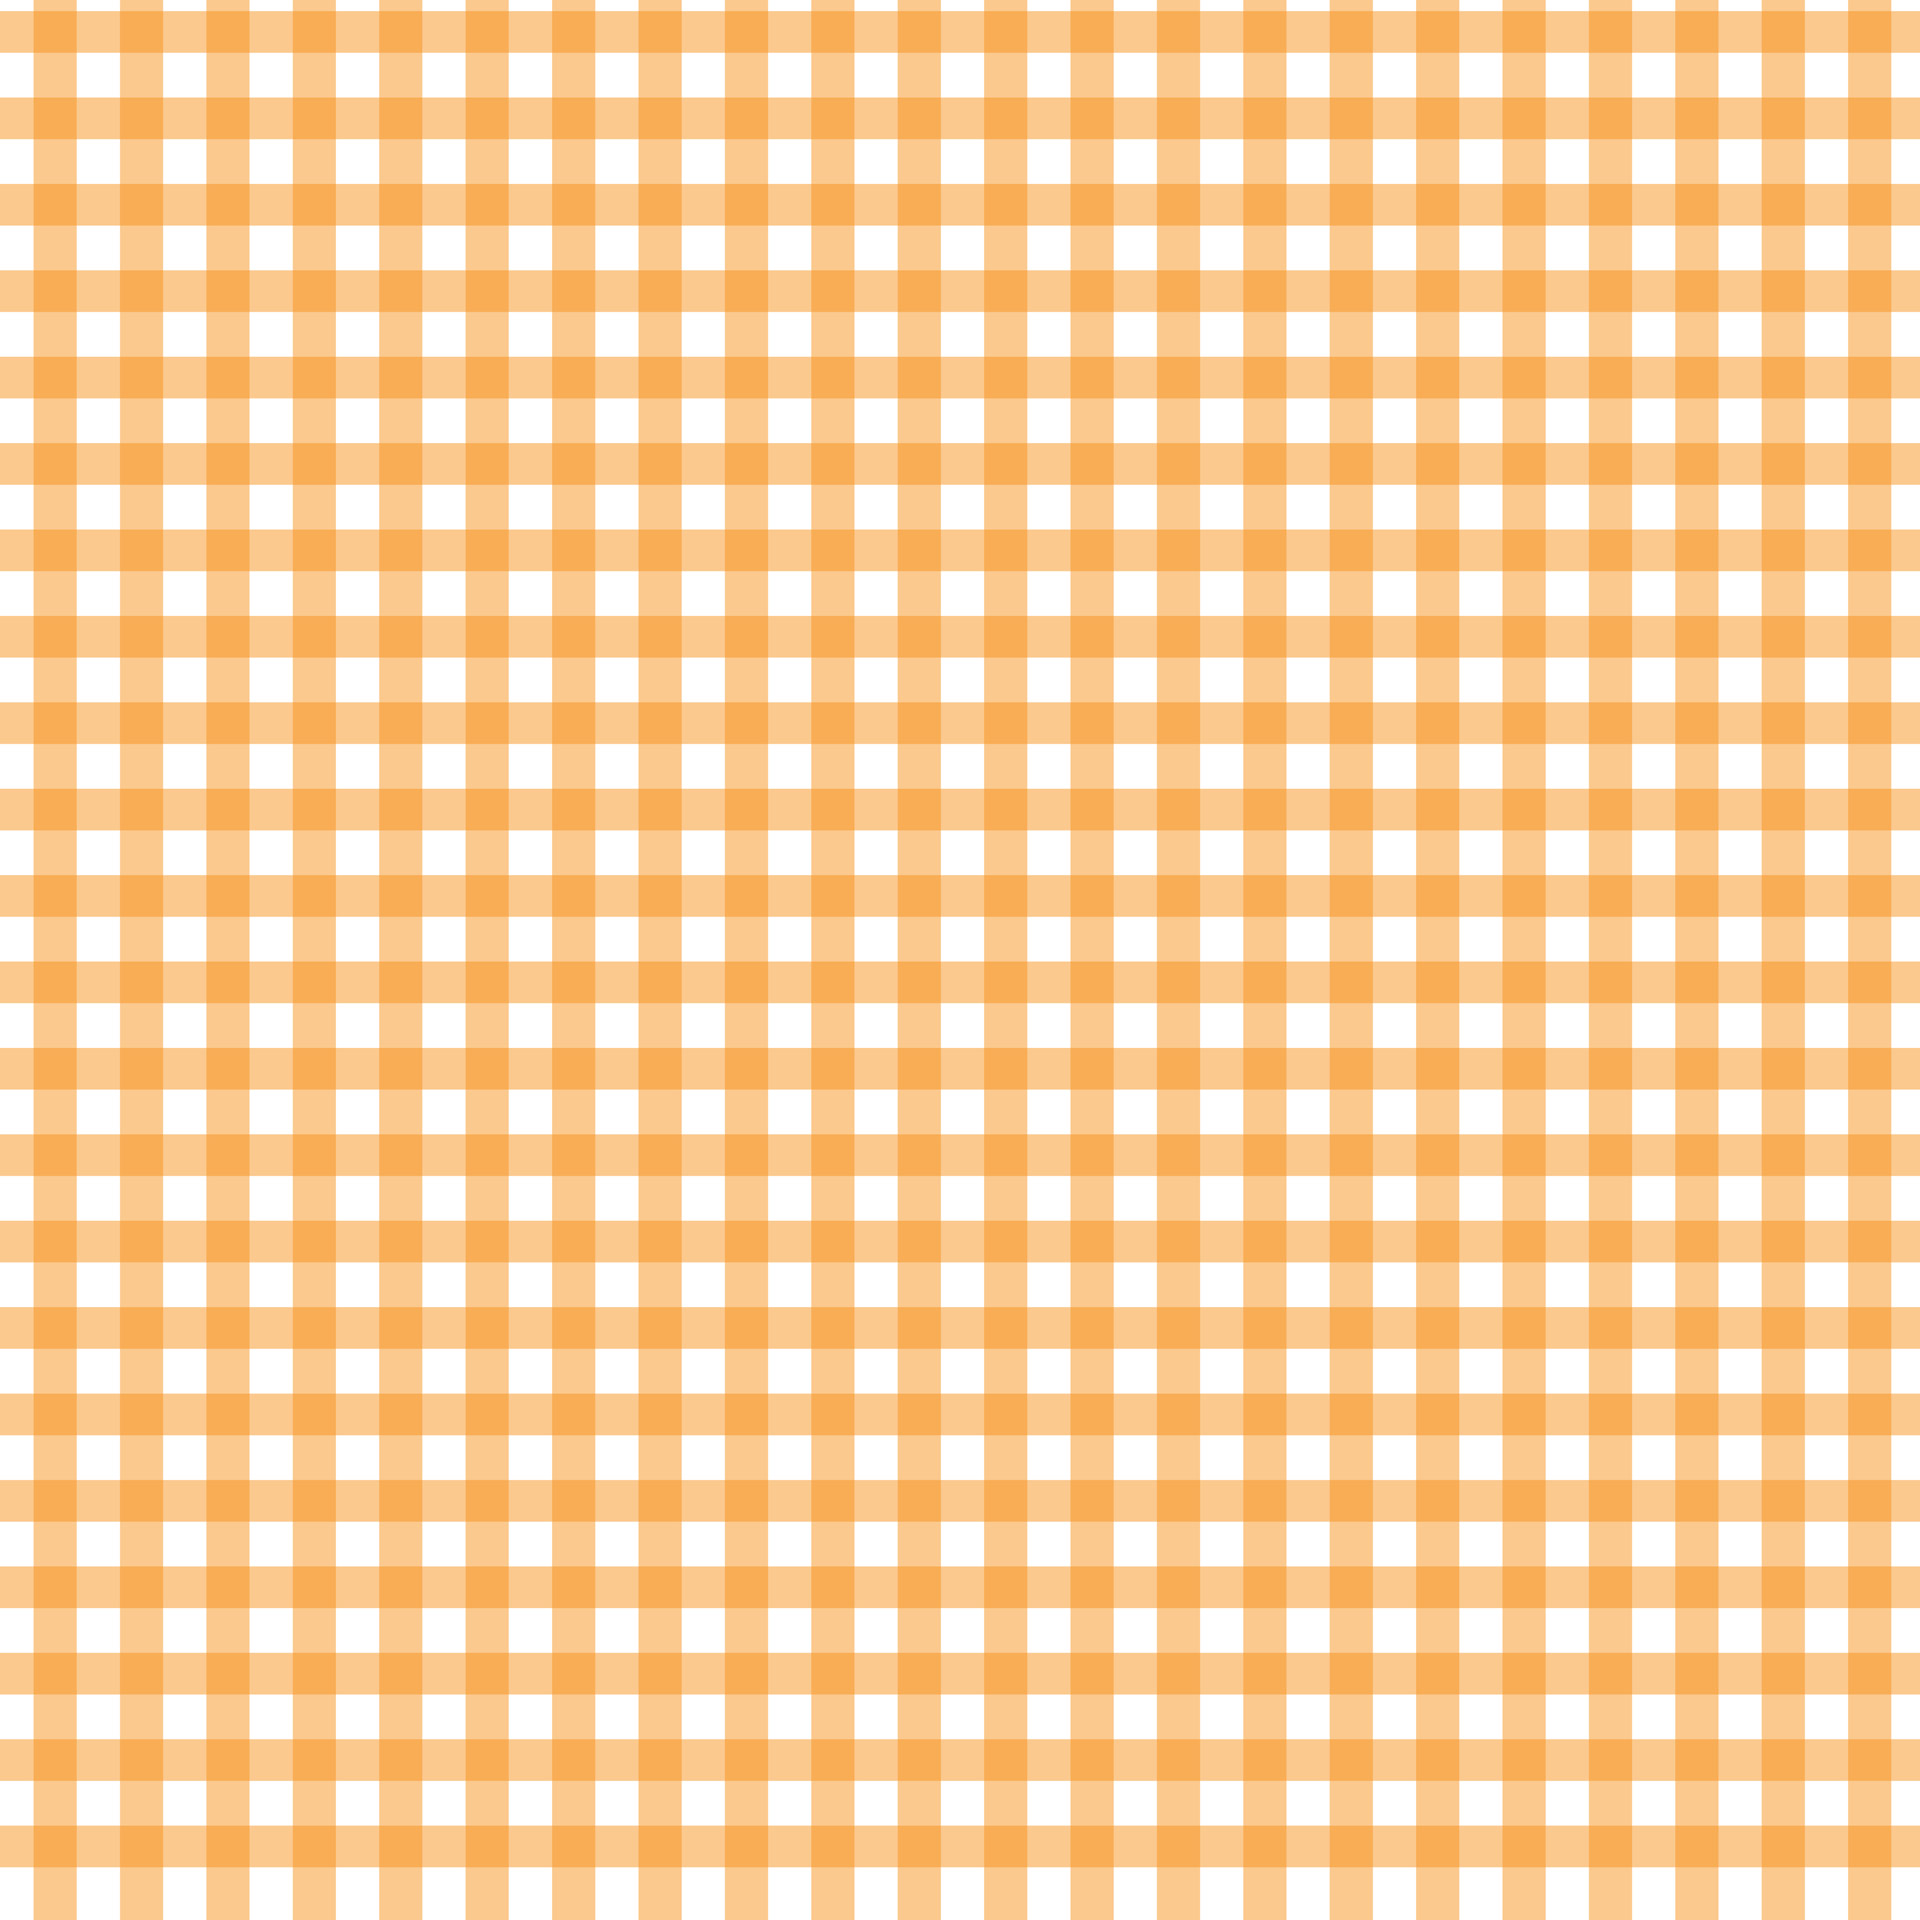 Orange and white gingham checks pattern background seamless